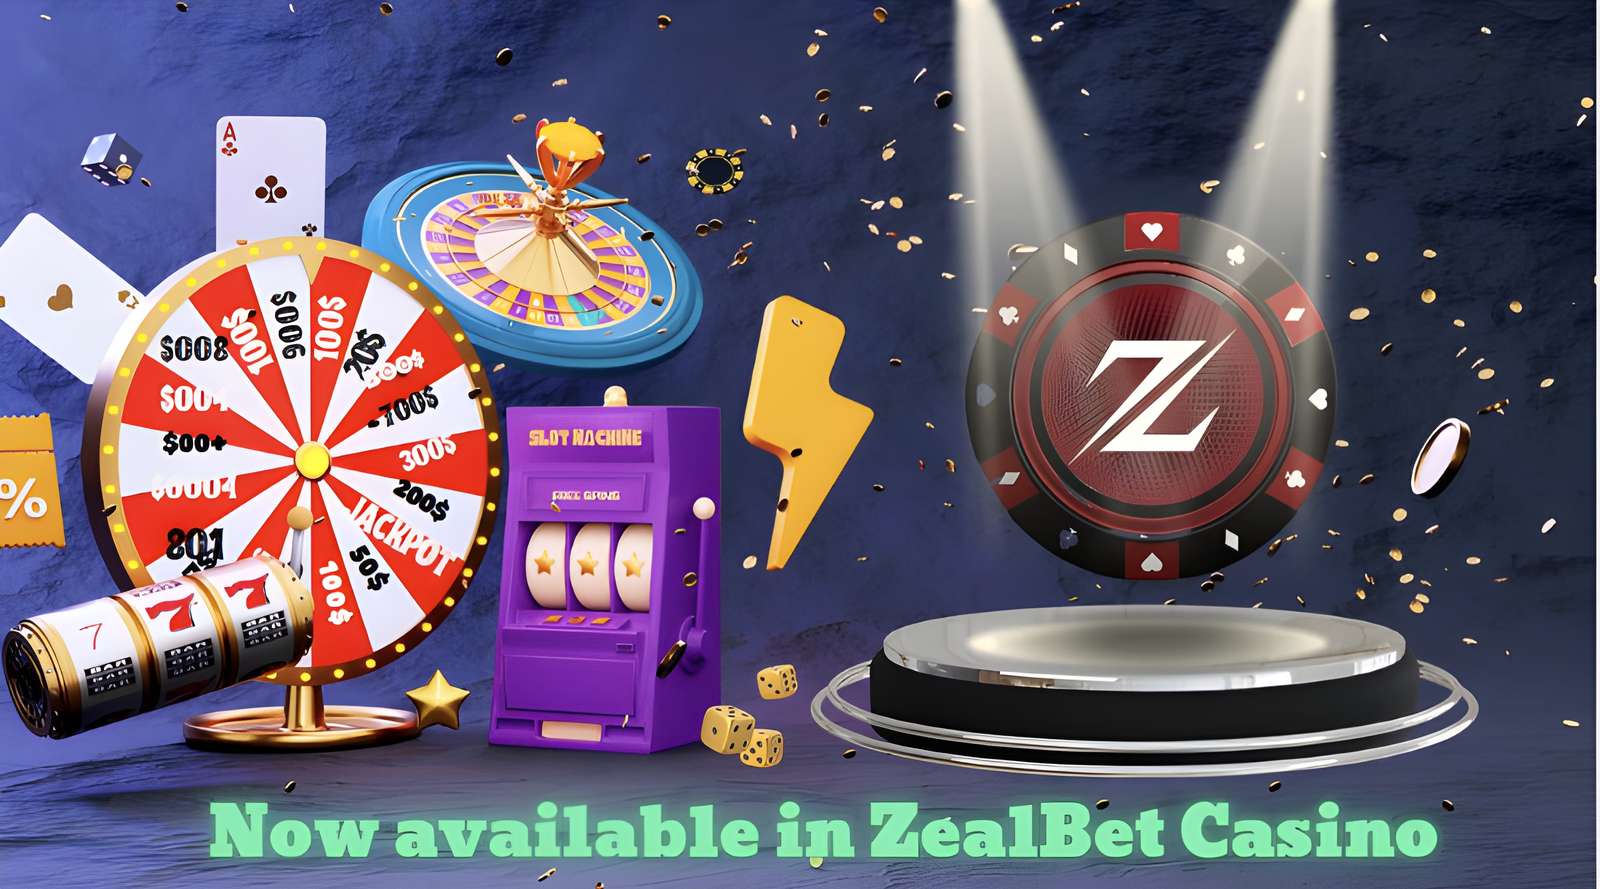 Объявление о головоломке Zeal онлайн-пазл